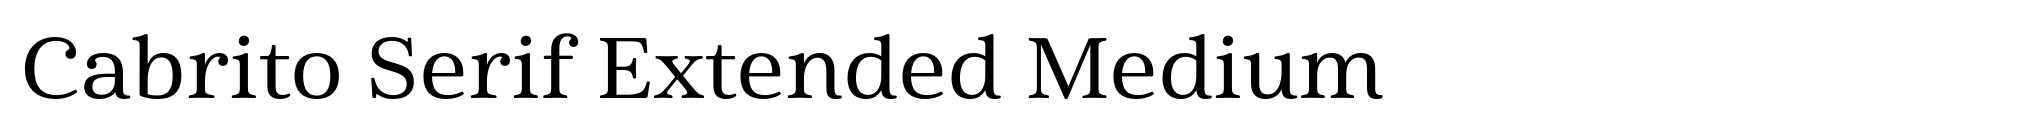 Cabrito Serif Extended Medium image